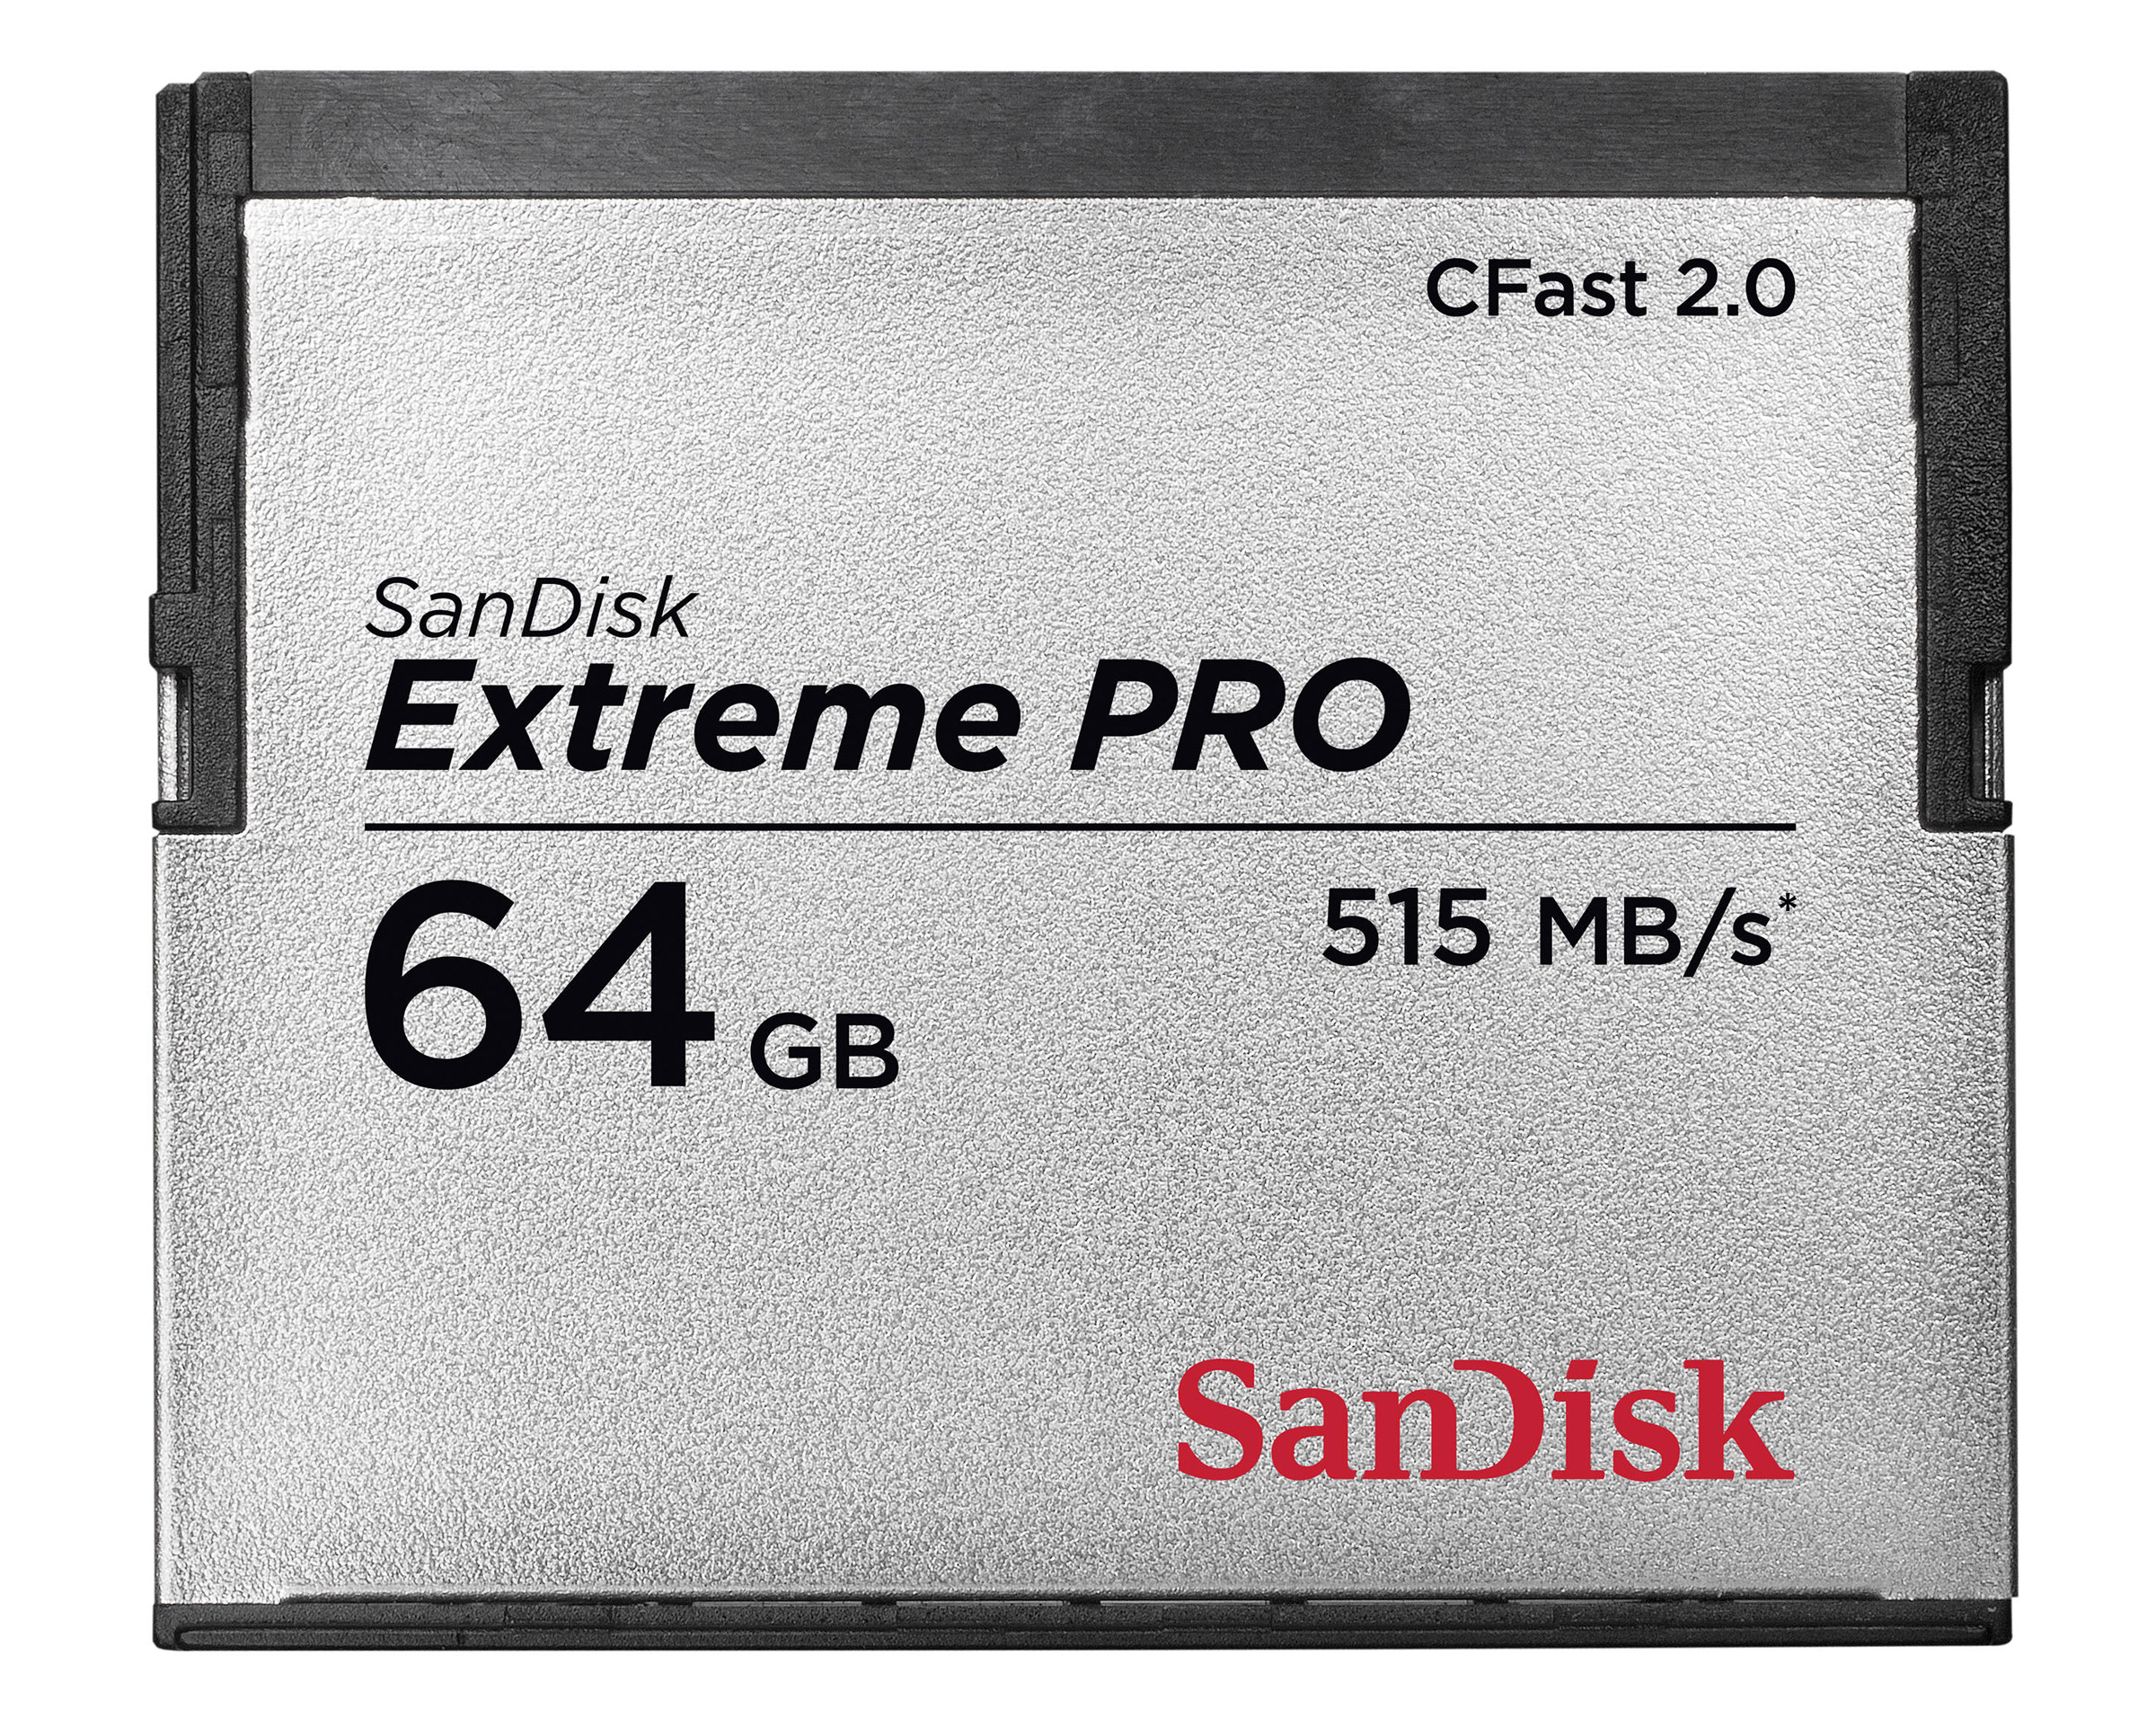 Sandisk Extreme Pro CFast 2.0 64 GB (515 MB/s)